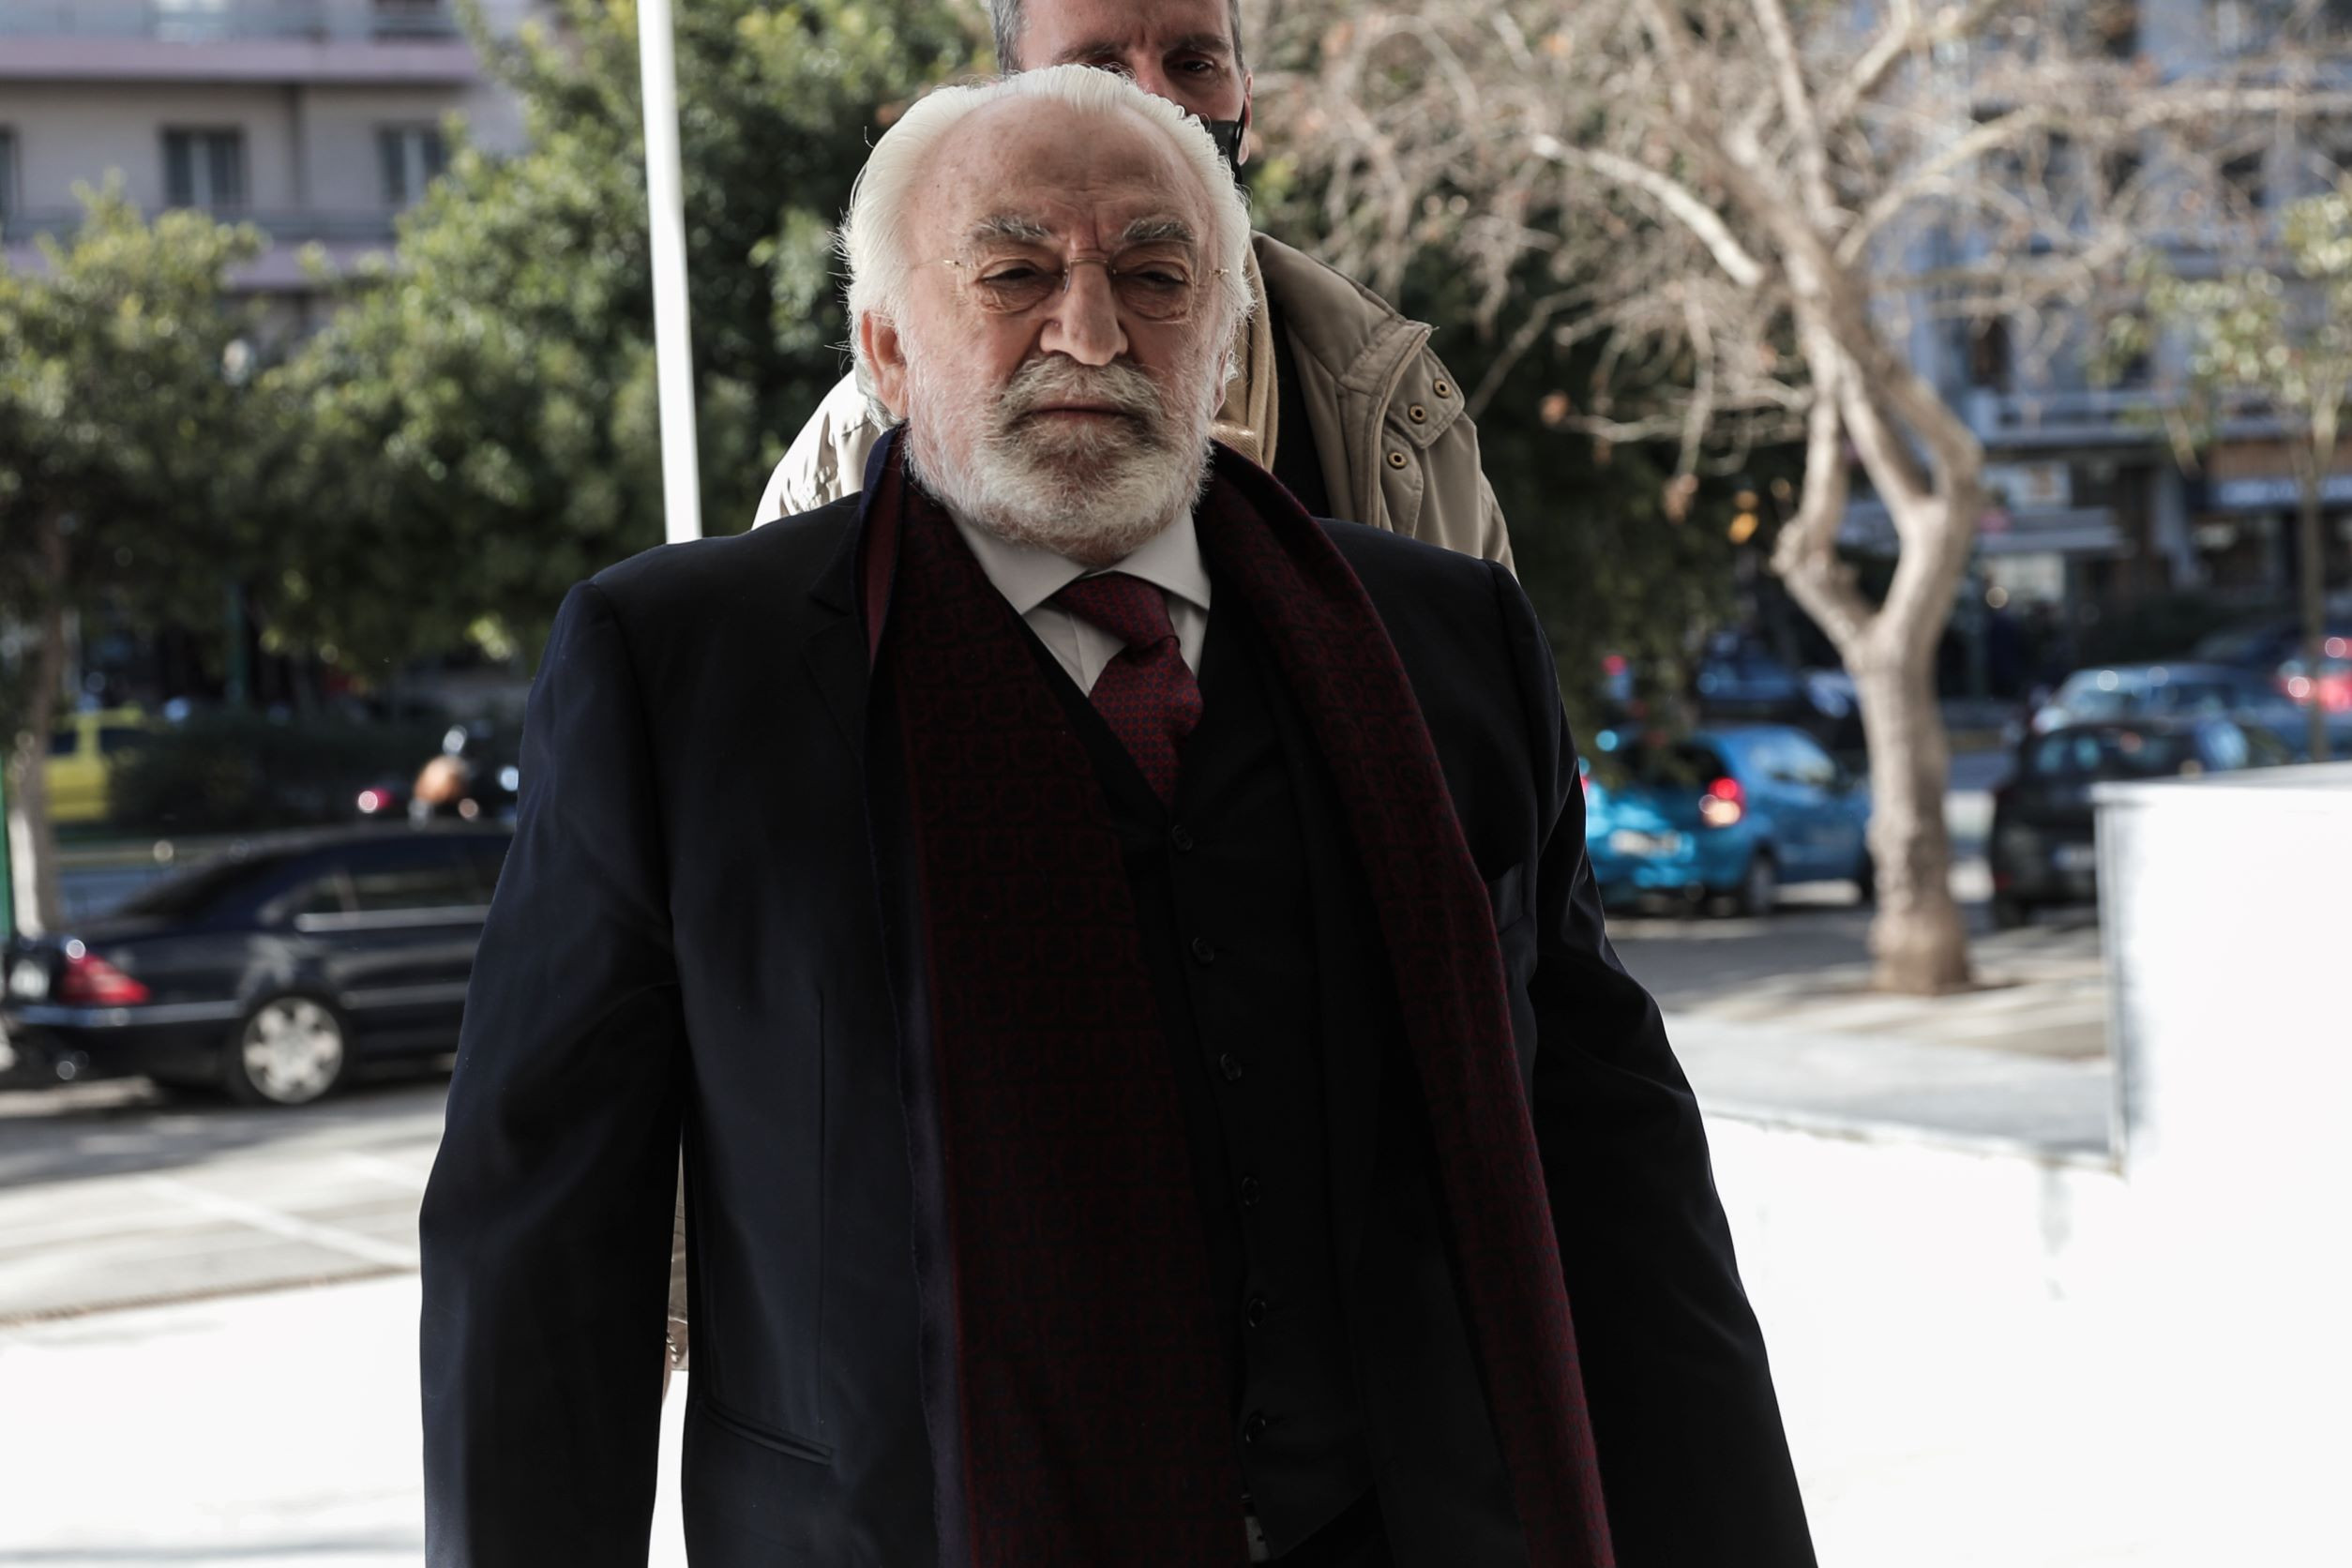 Eιδικό Δικαστήριο – Συνήγοροι Ν. Παππά: Μάρτυρας του Καλογρίτσα αποδόμησε το κατηγορητήριο